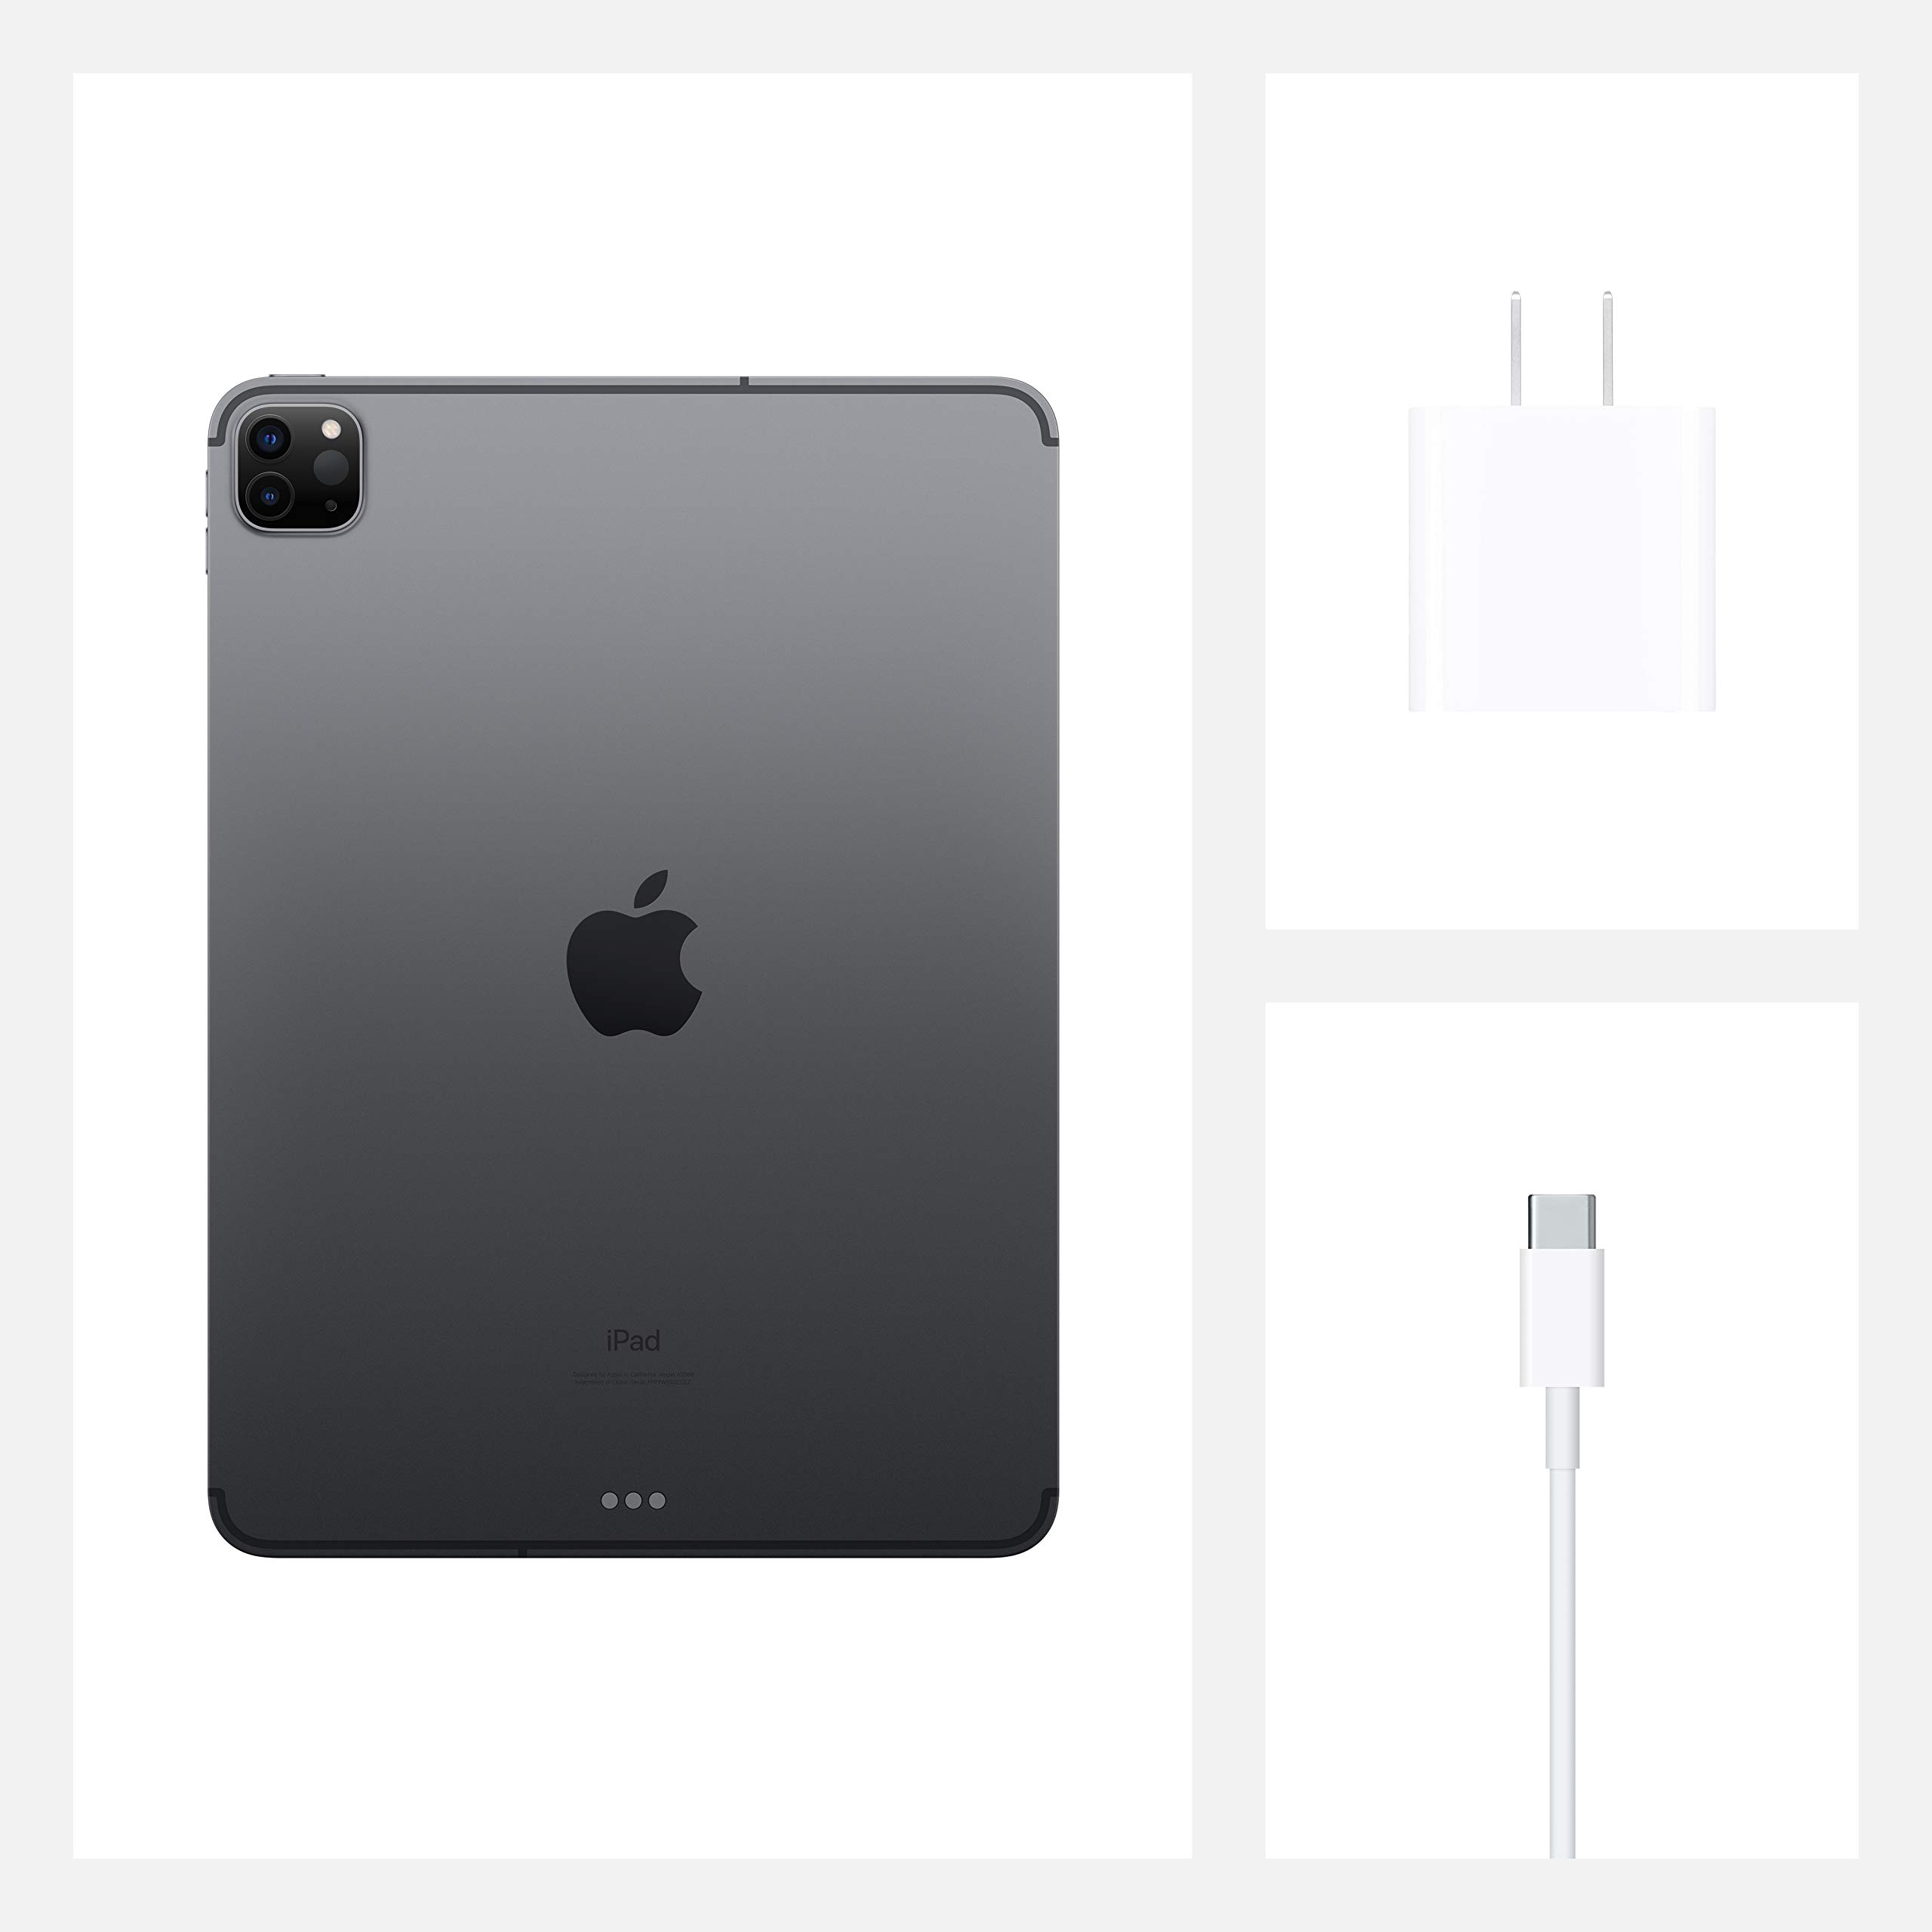 Apple 2020 iPad Pro (11-inch, Wi-Fi, 256GB) - Space Gray (2nd Generation)